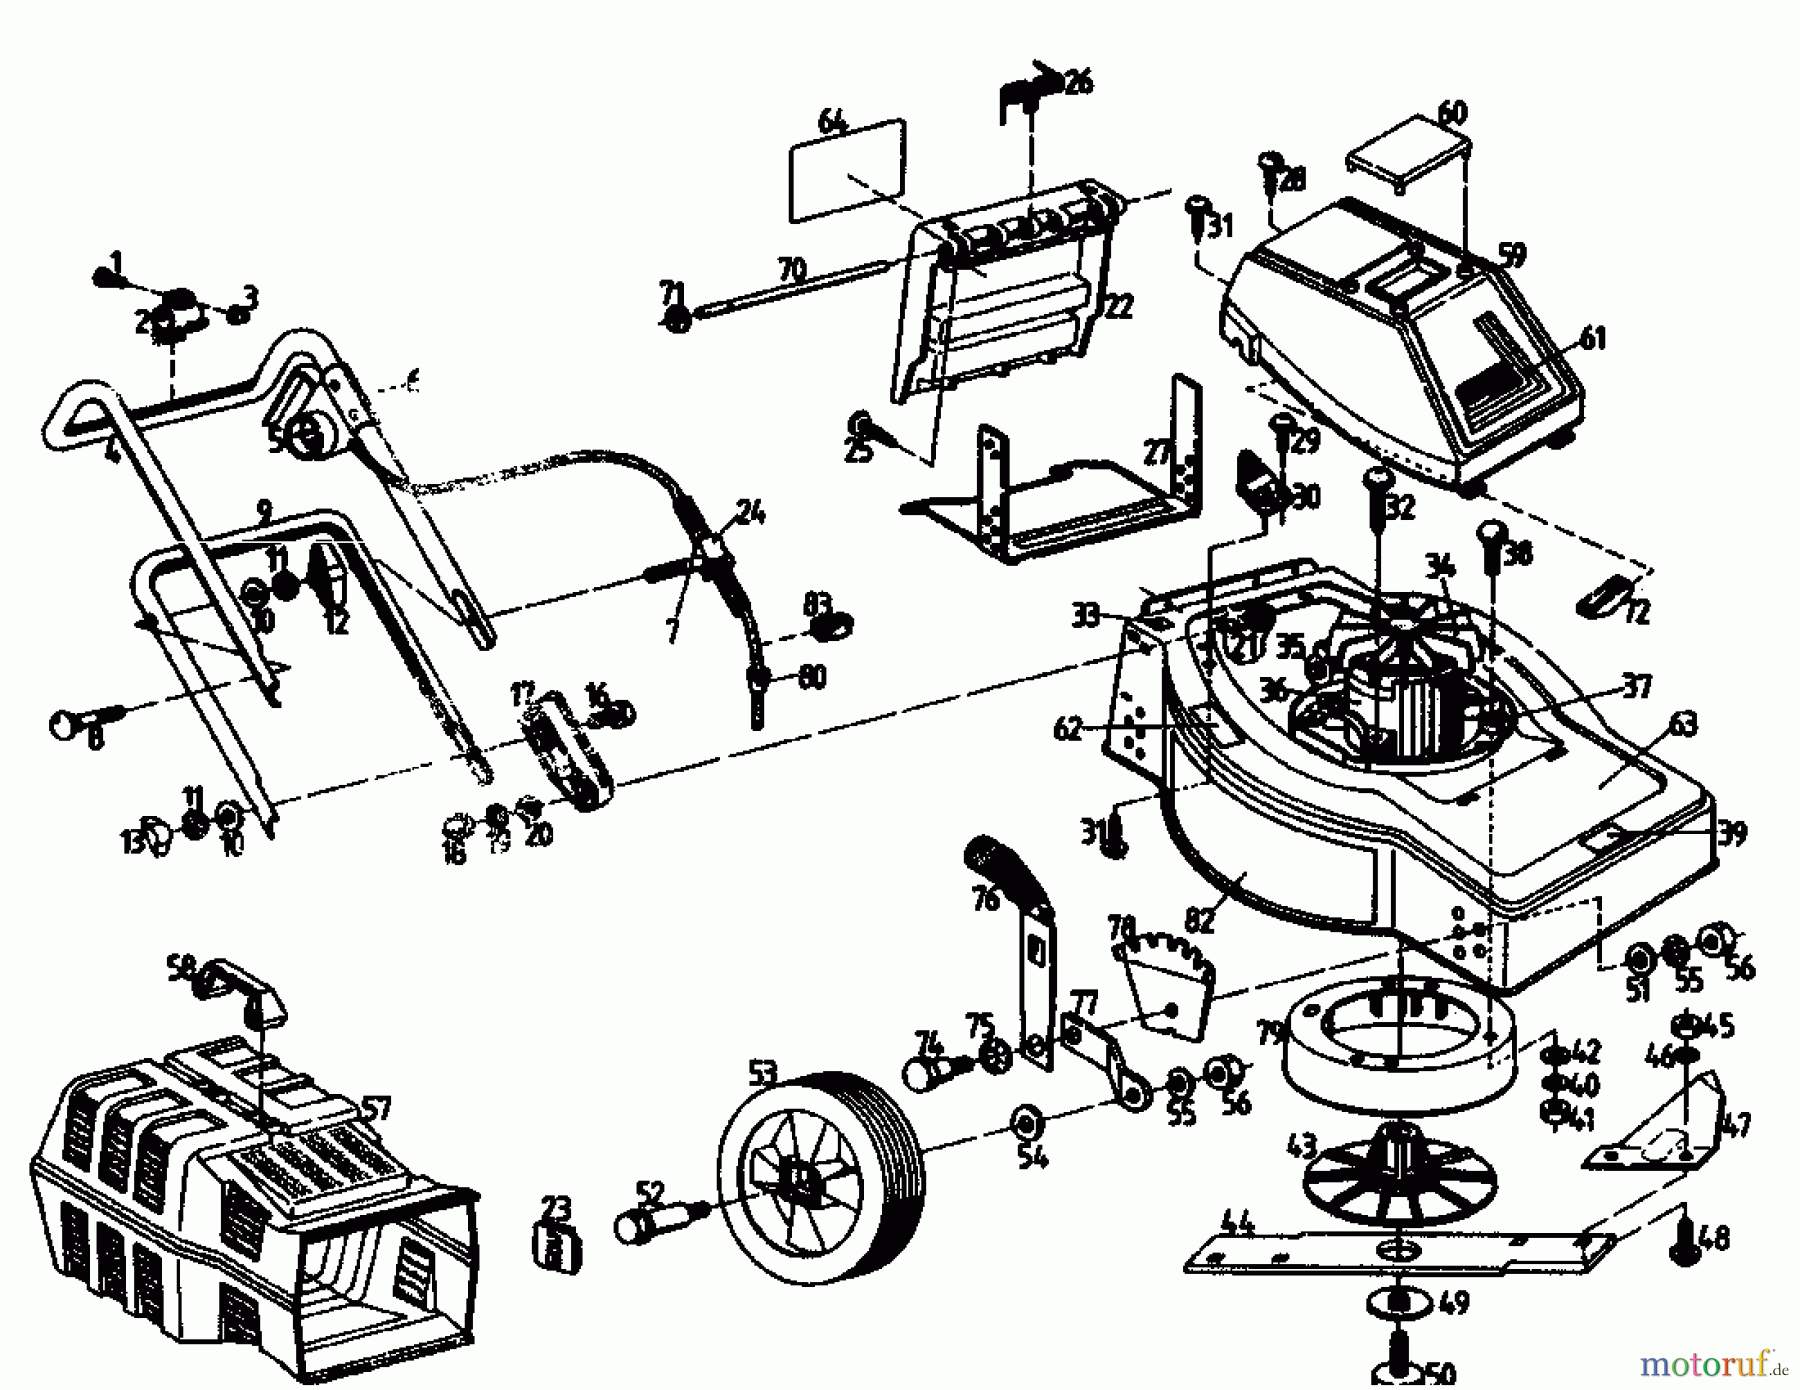  Golf Electric mower 345 HLES 02841.03  (1989) Basic machine